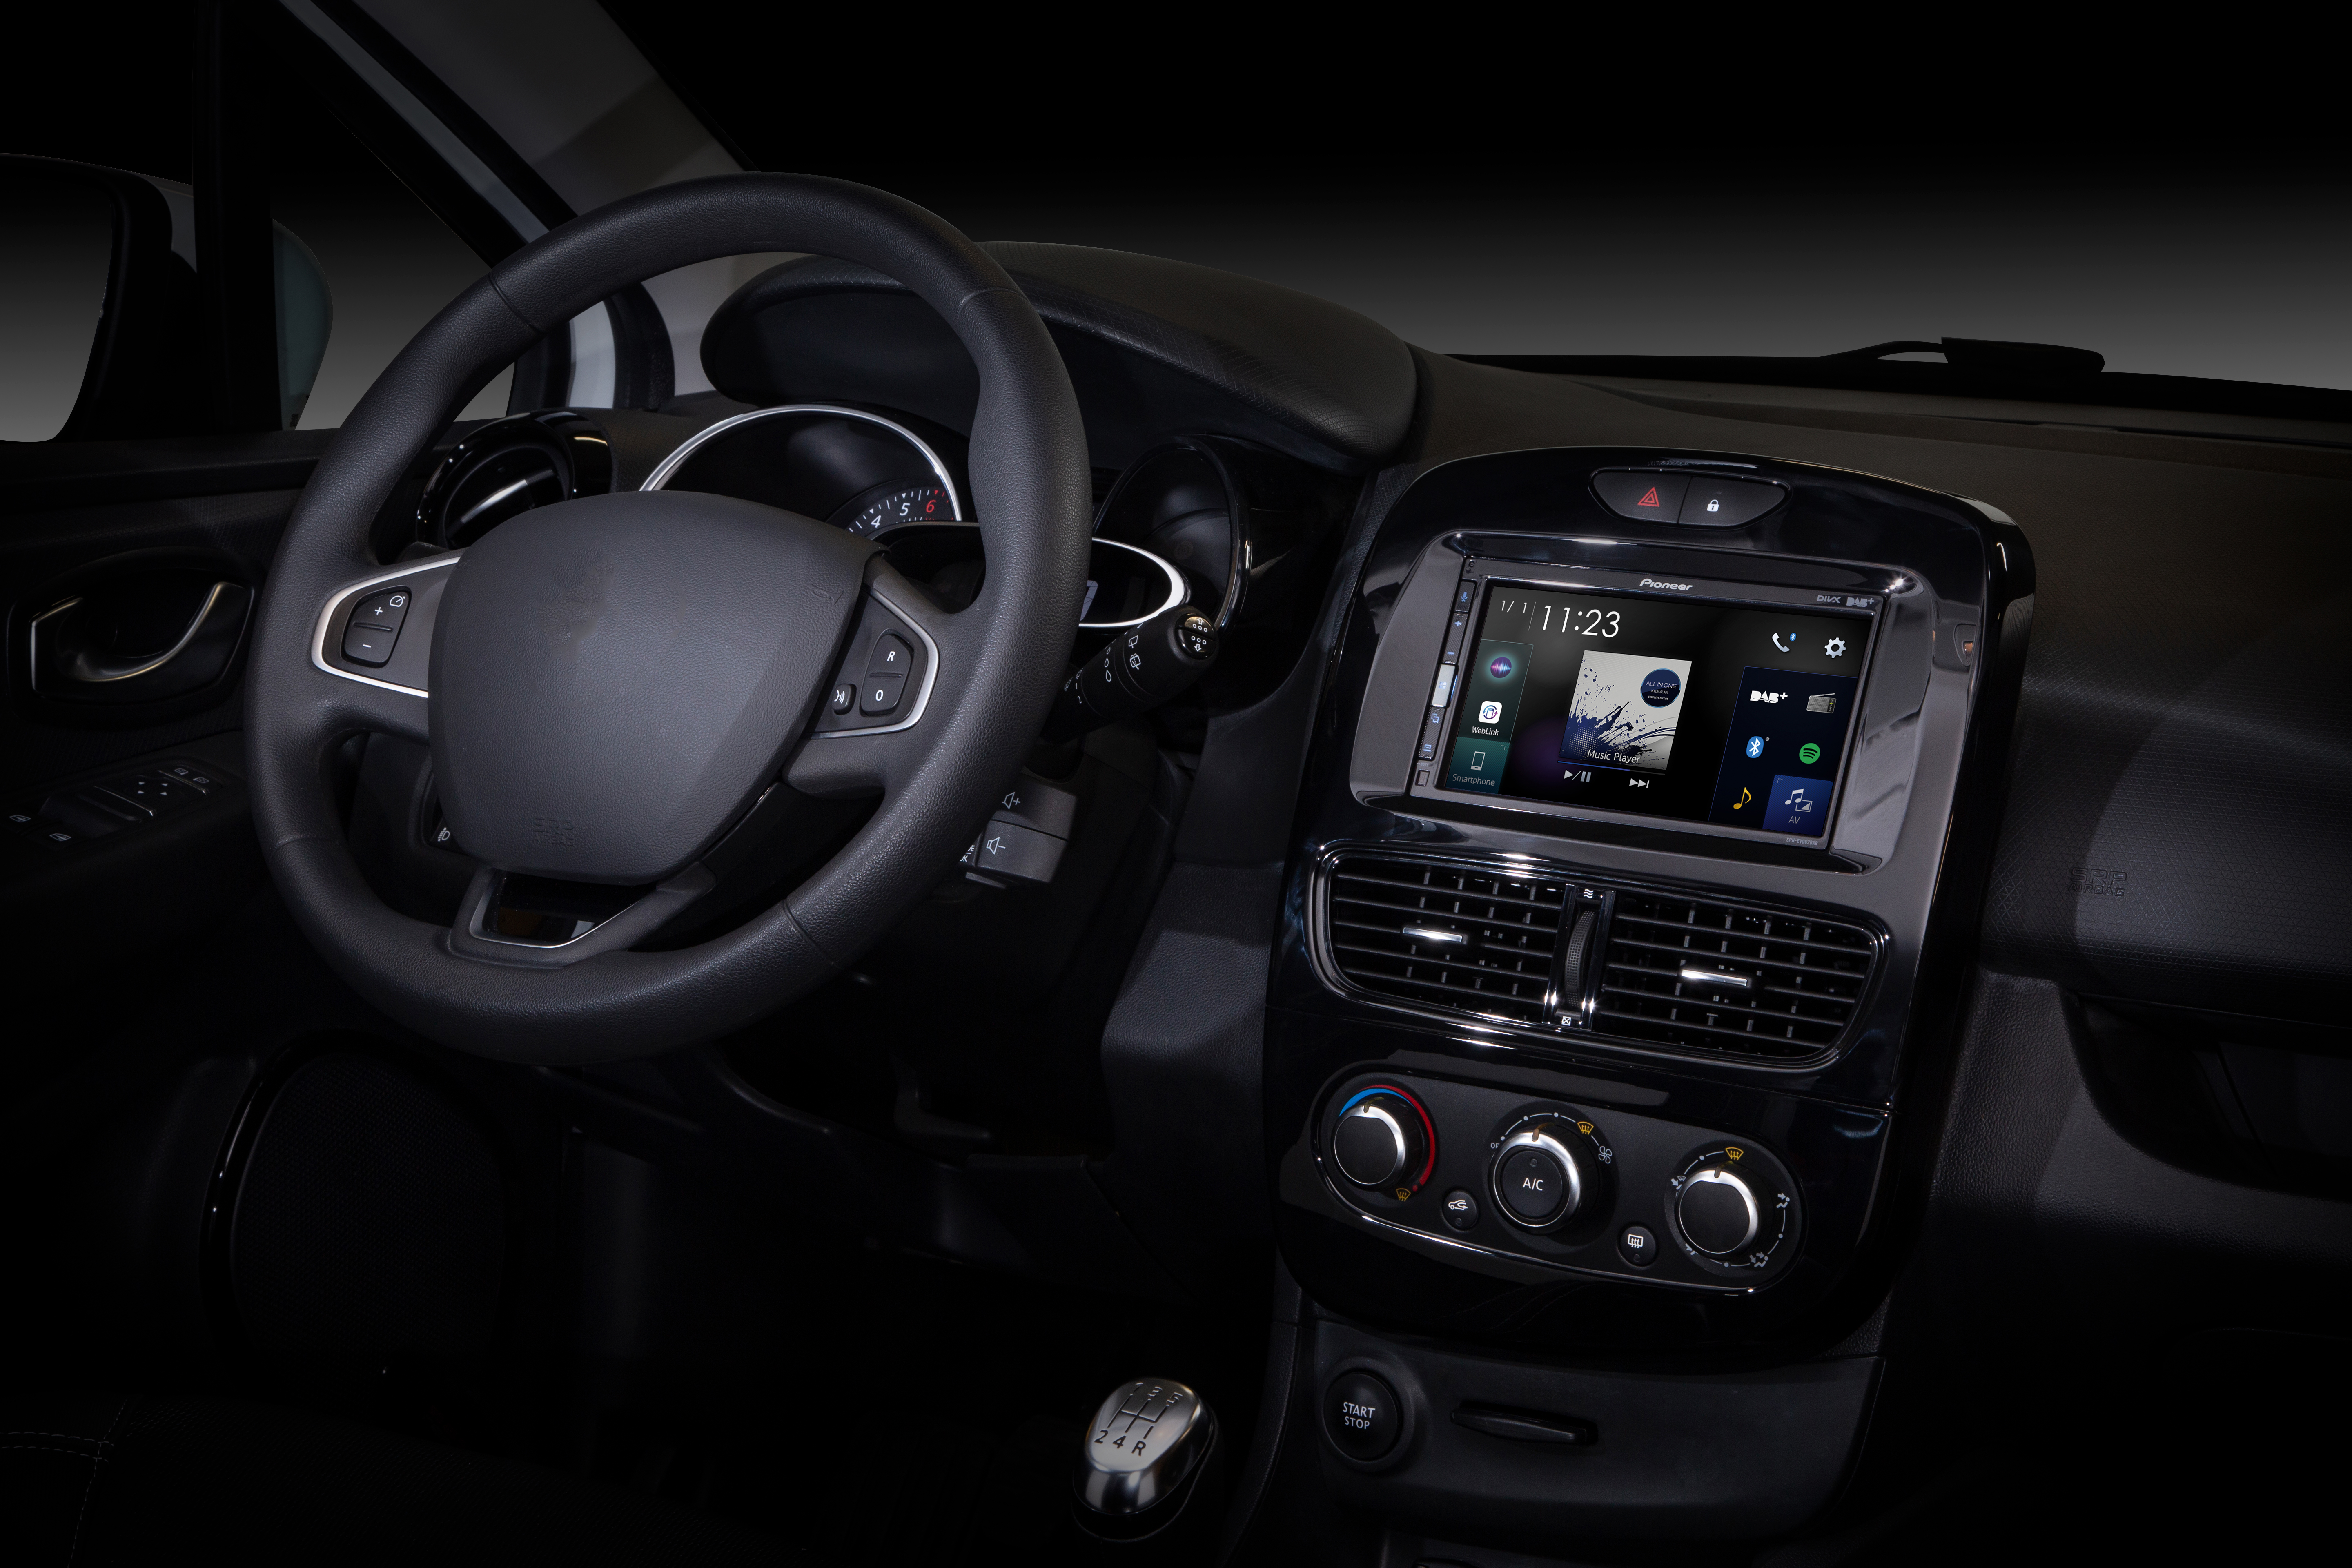 Renault Clio 2012-2019 Apple CarPlay & Android Auto Integration